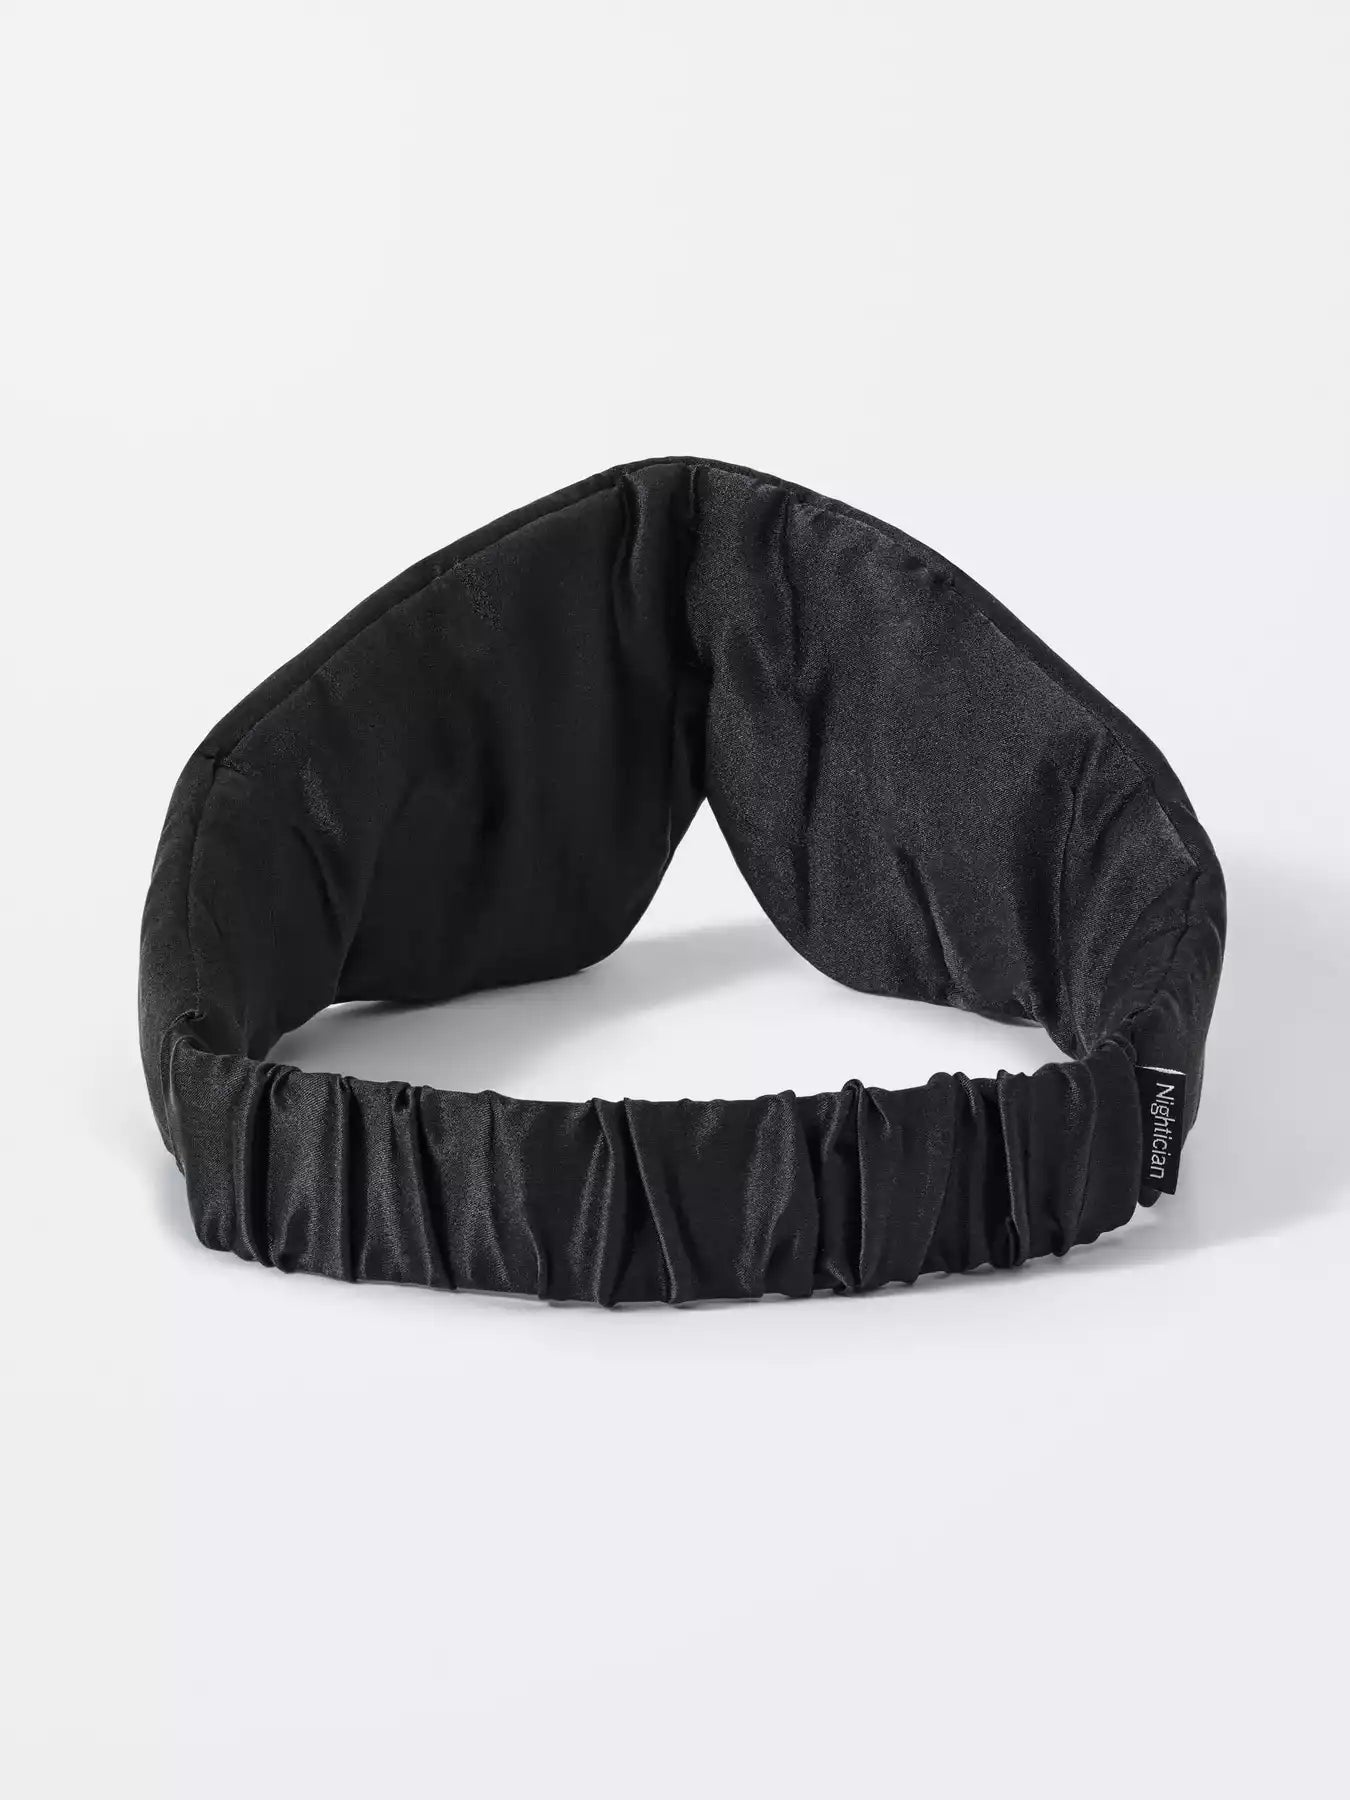 Sleep Mask Black + Silk Pillowcase Black for Beauty Pillow